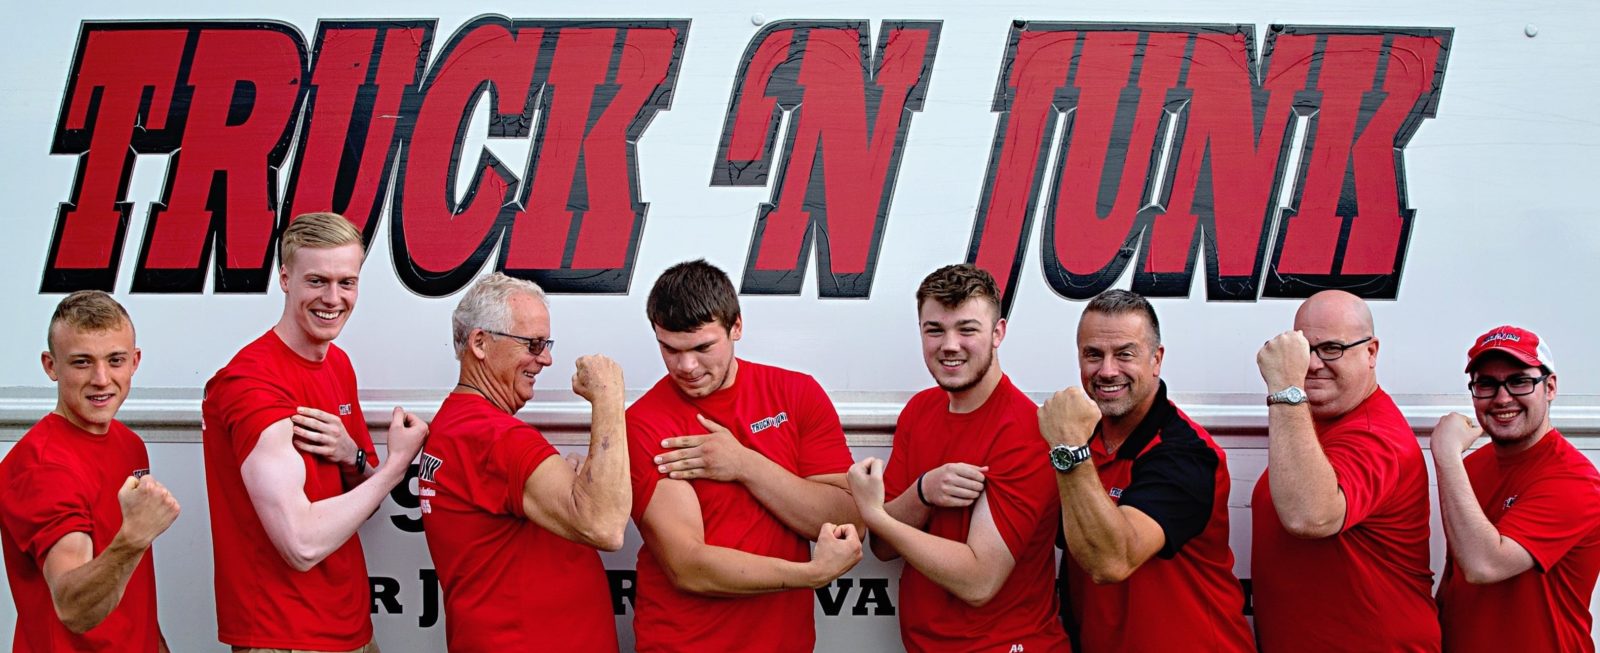 Truck N Junk team members flexing in front of truck